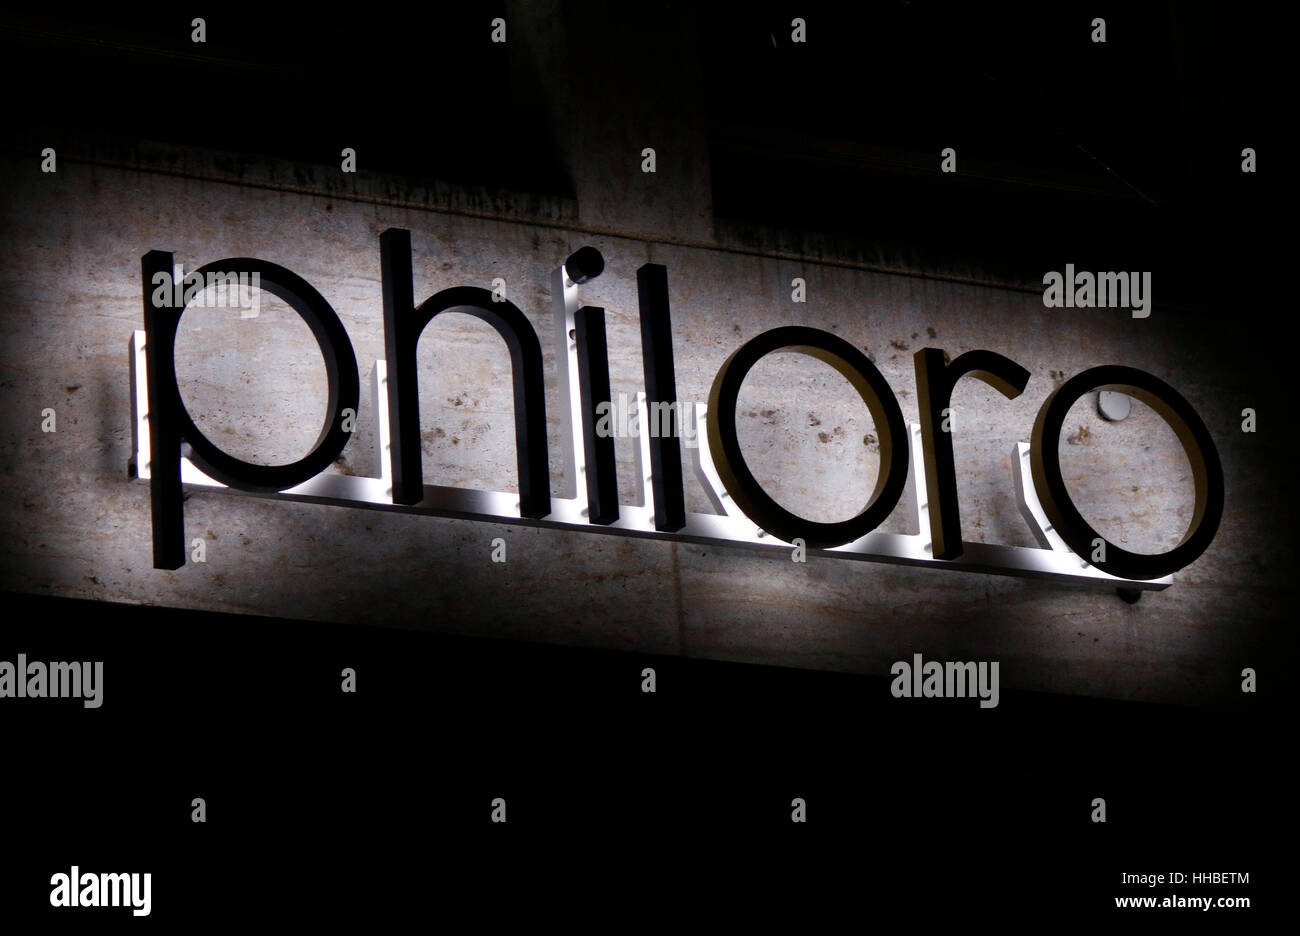 Das Logo der Marke "Philoro", Berlin. Stockfoto